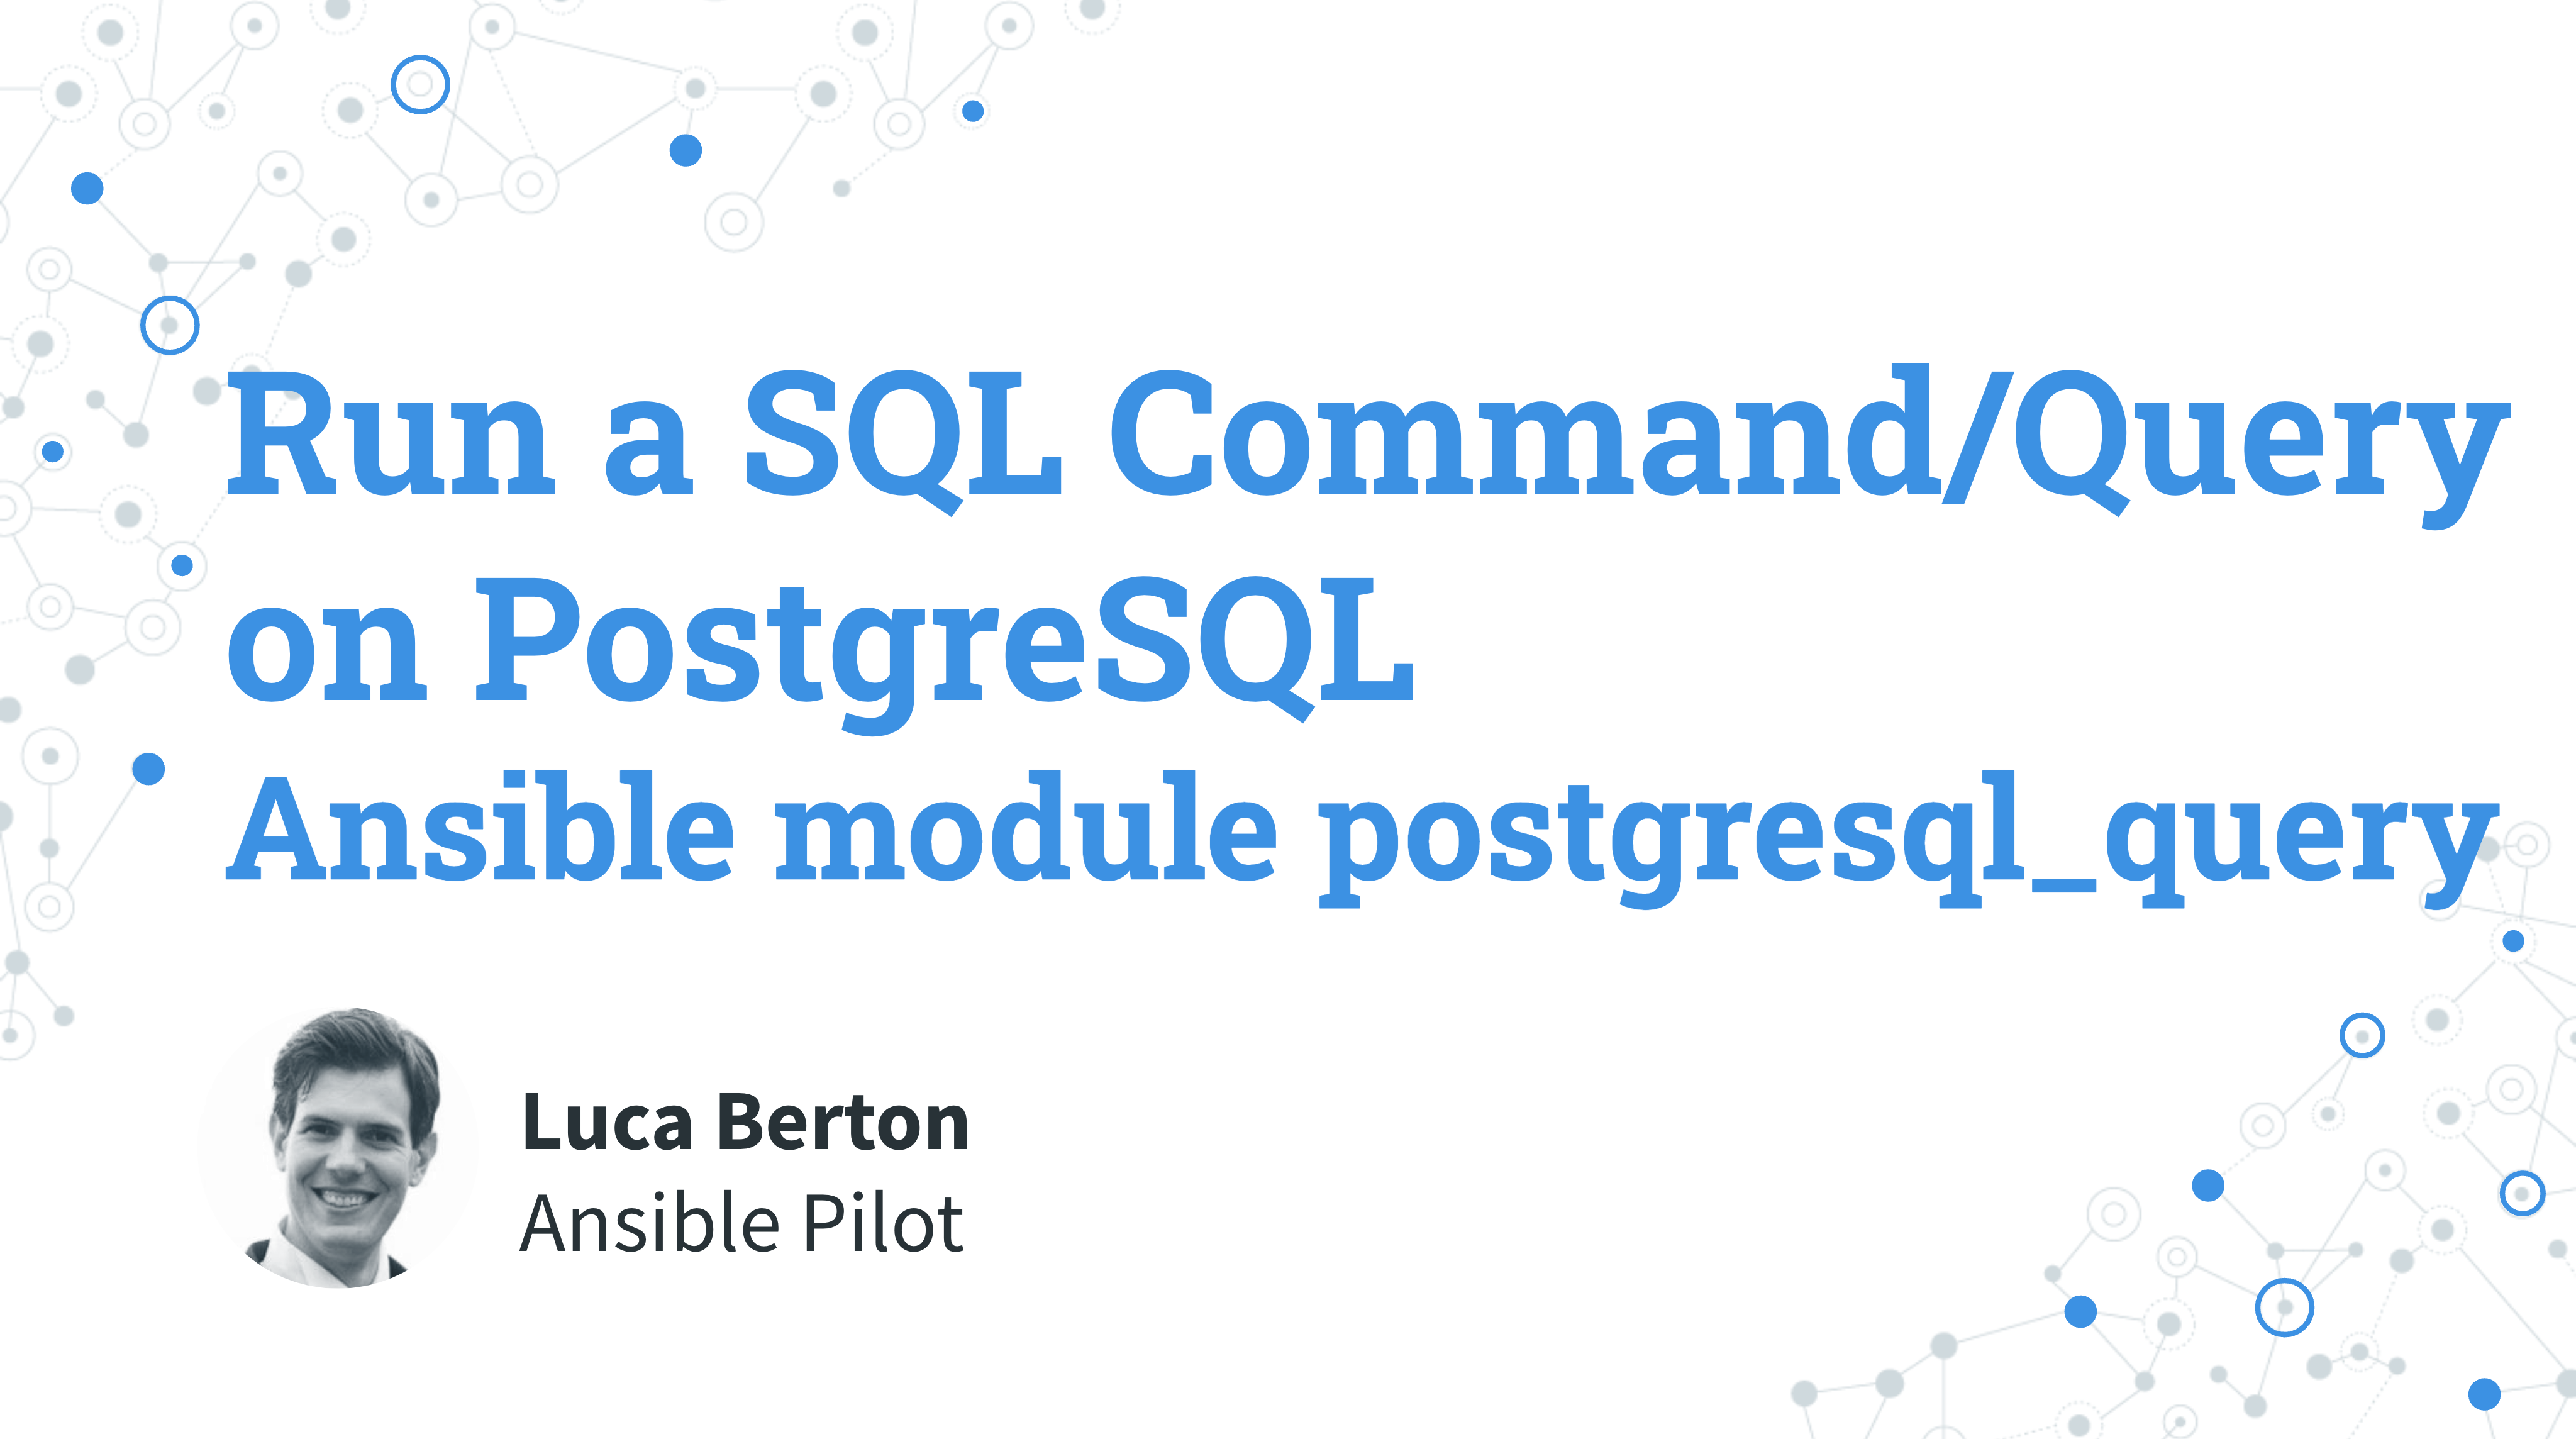 Run a SQL Command/Query on PostgreSQL - Ansible module postgresql_query